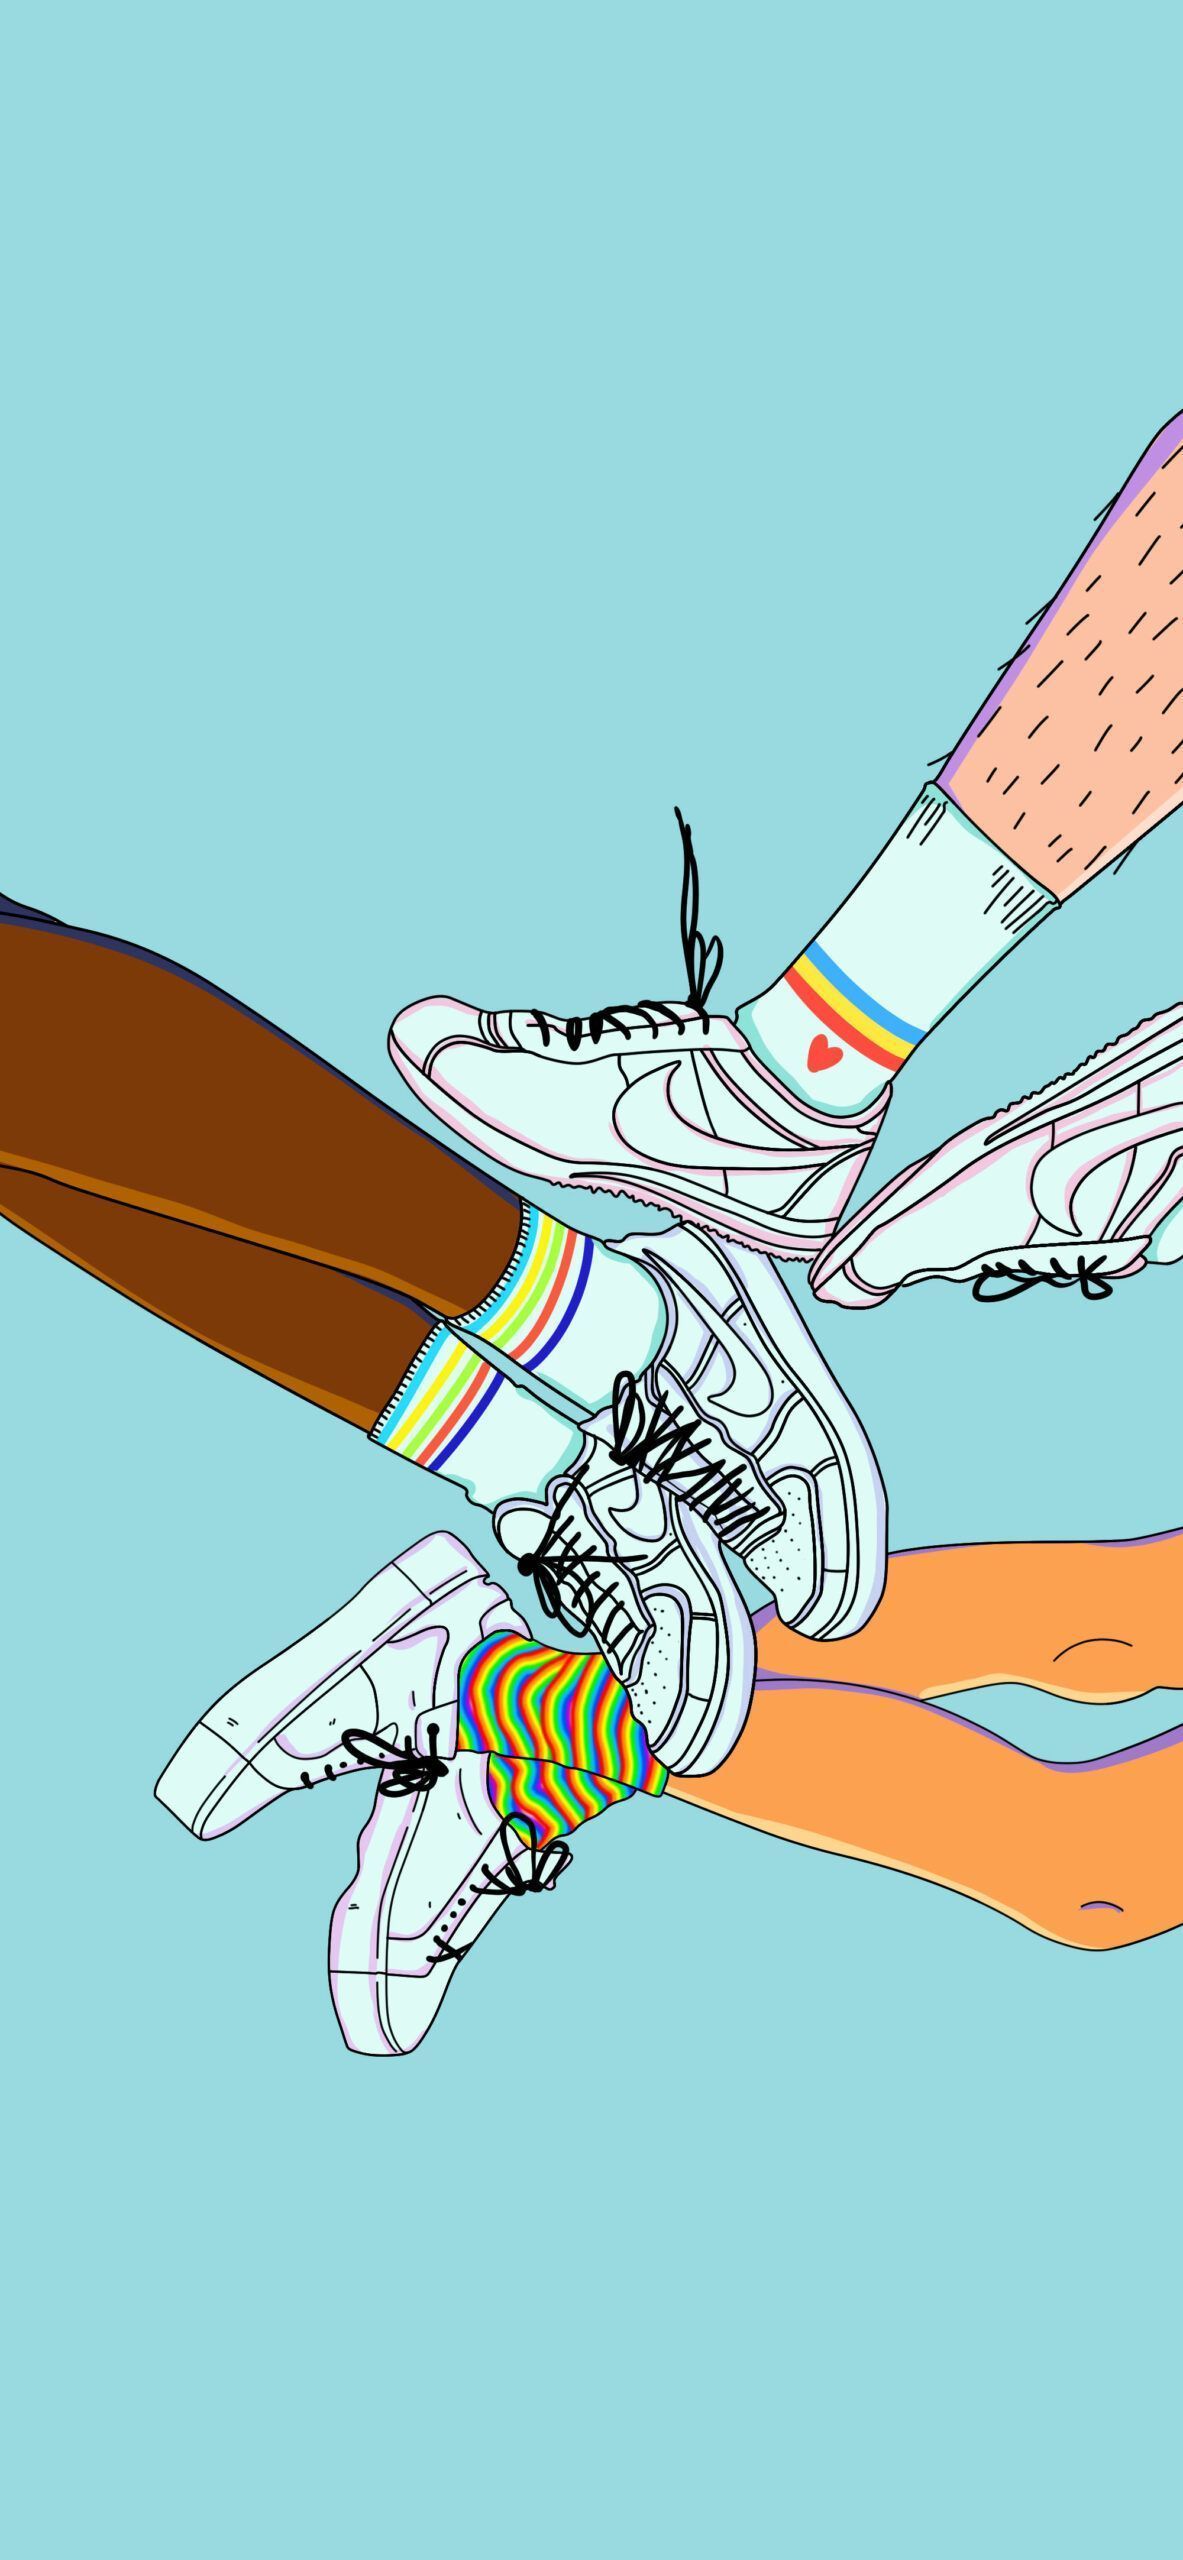 Aesthetic wallpaper of Nike Air sneakers with rainbow socks. - Nike, shoes